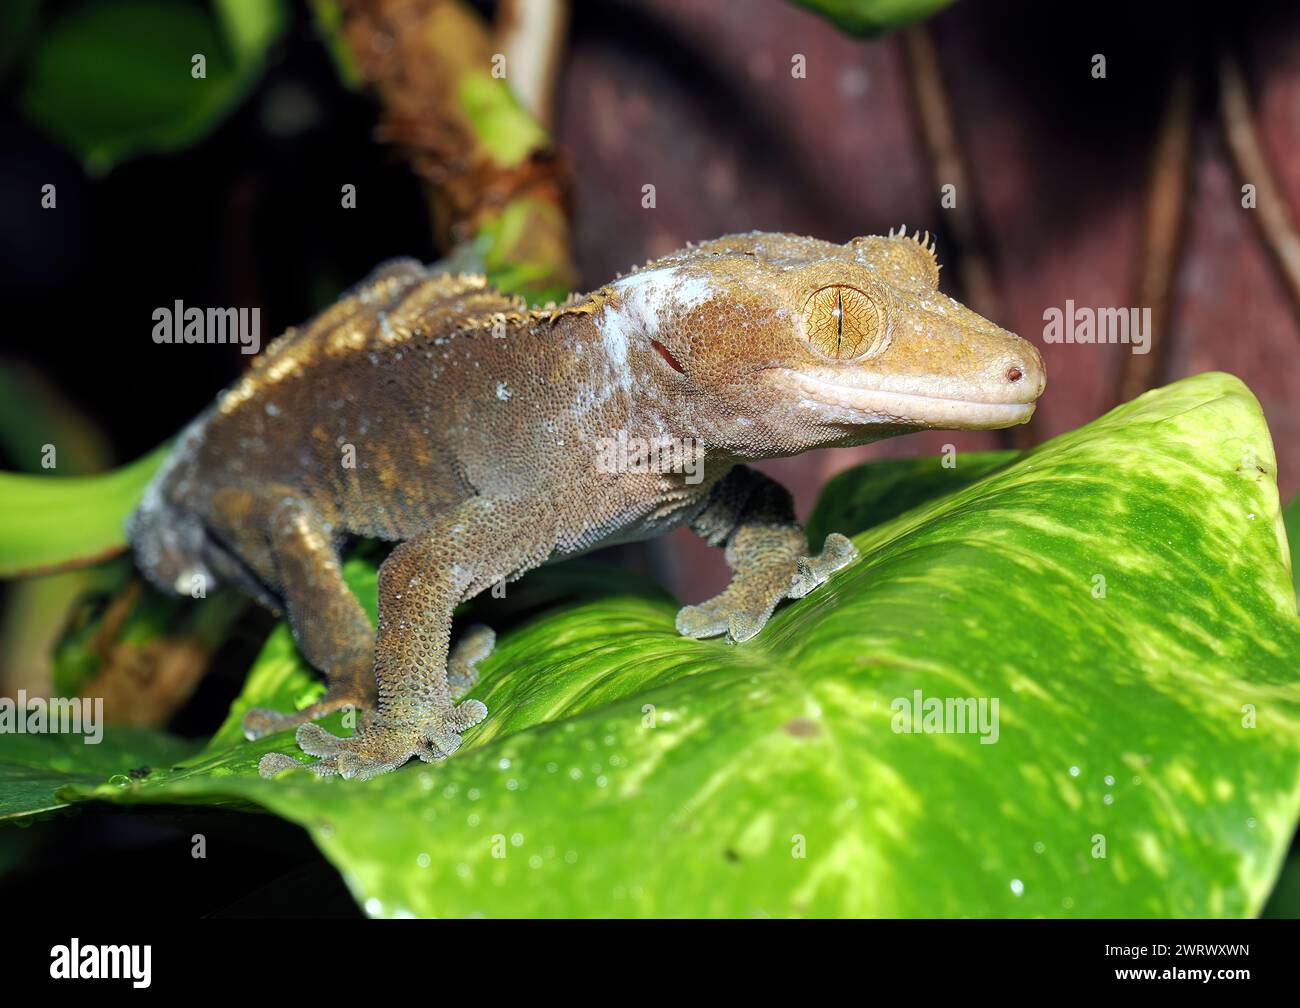 Geco crestato, geco ciglia, Kronengecko, Gecko à crête, Correlophus ciliatus, vitorlásgekkó Foto Stock